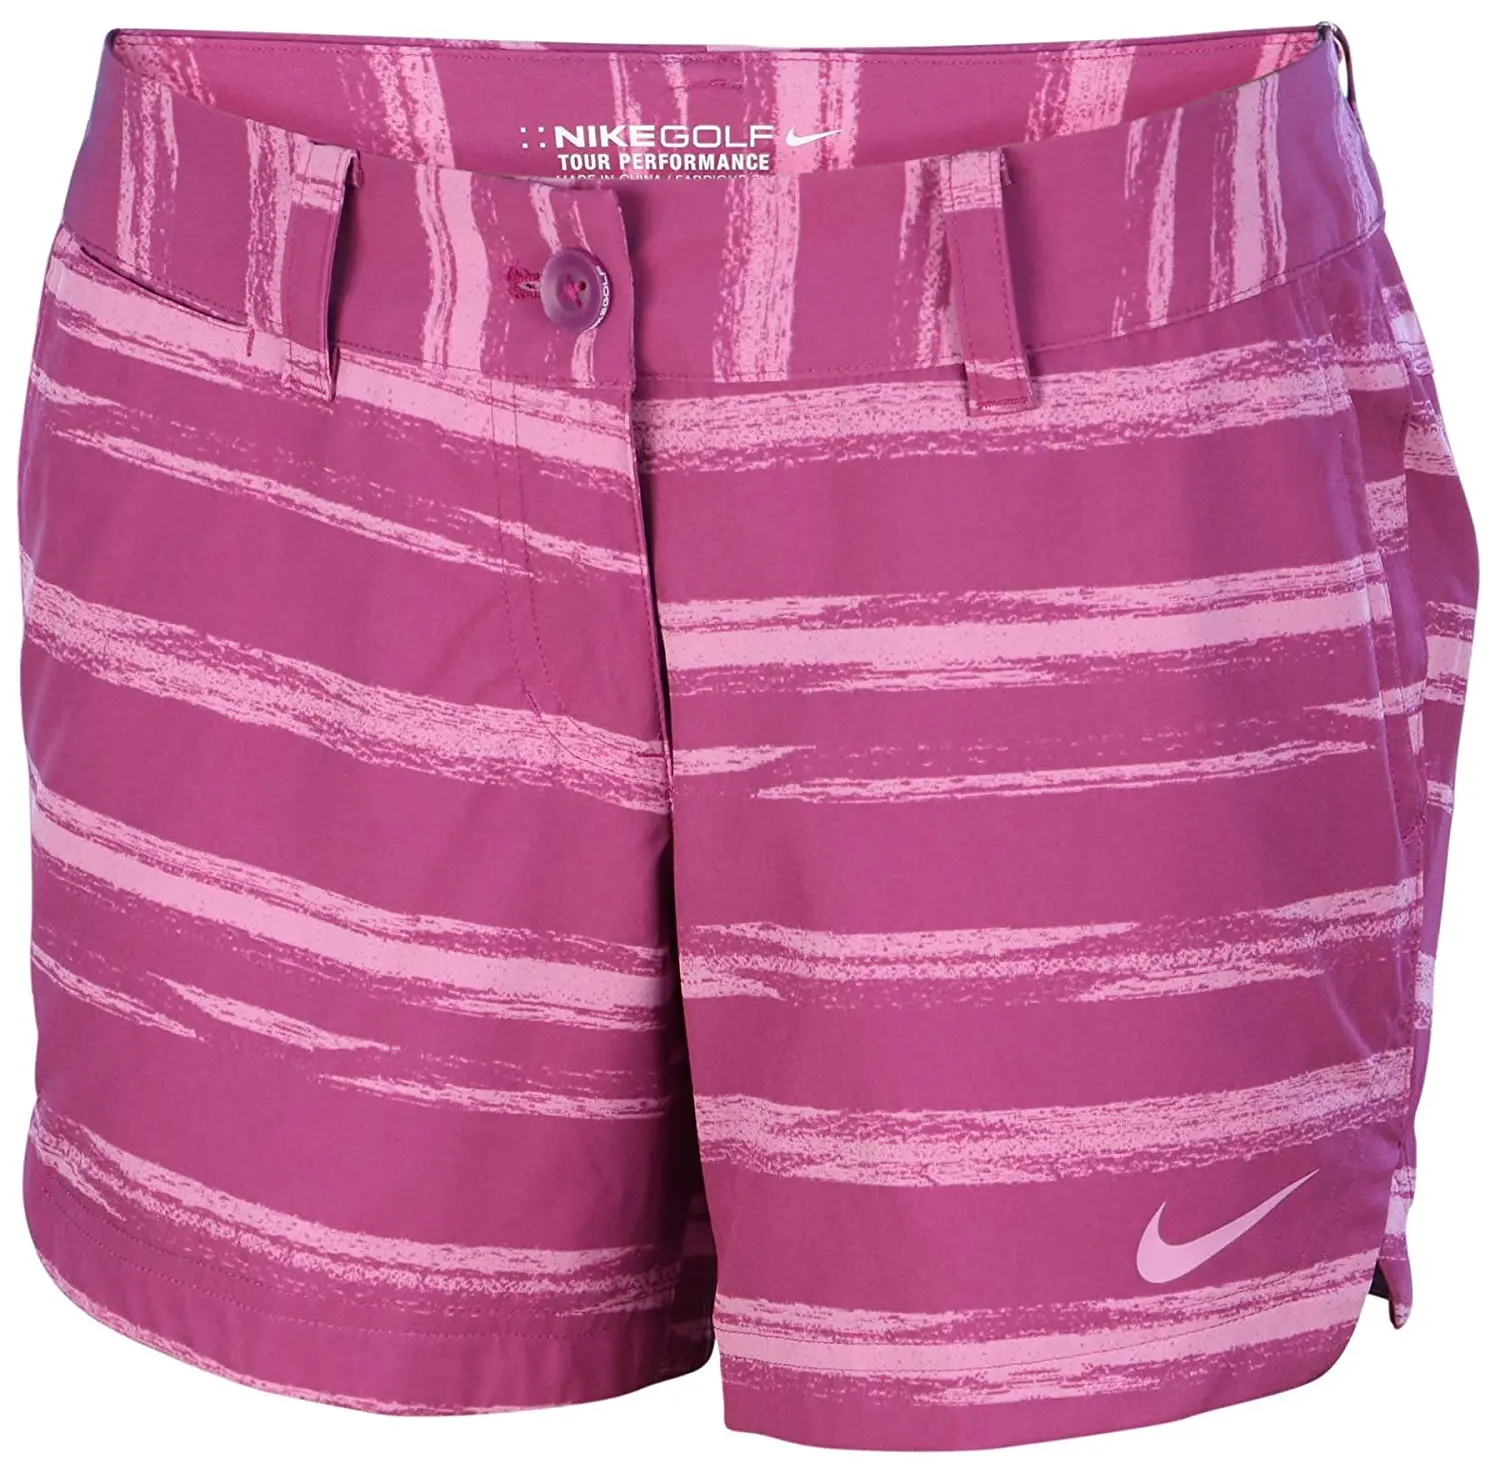 nike golf tour performance women's shorts